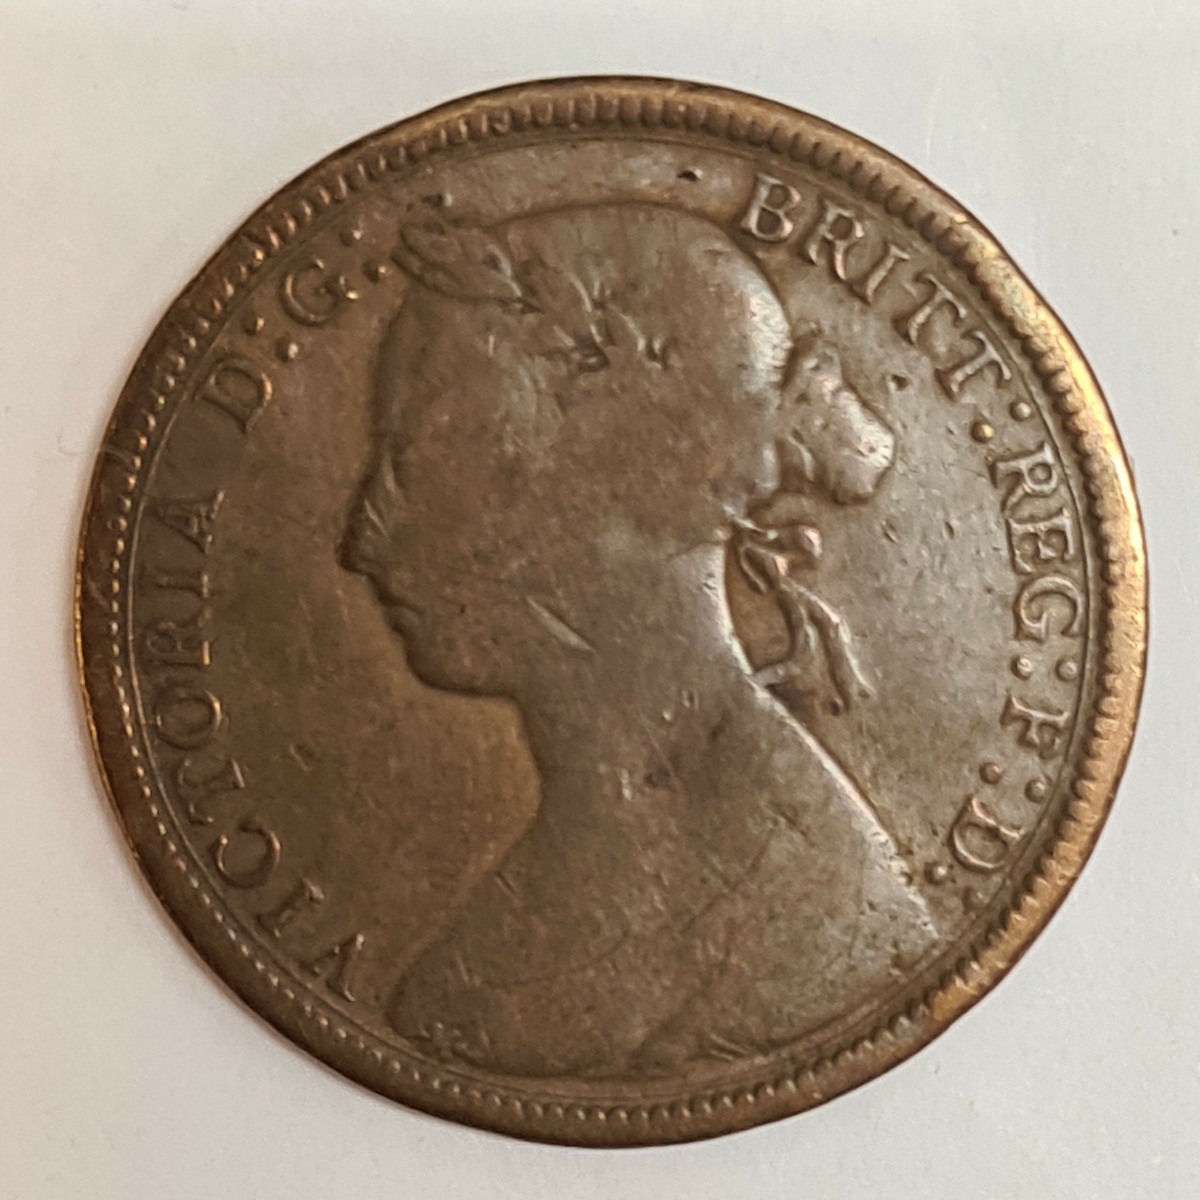 4 mynt från Storbritanien.
½ Penny, 1891
½ Penny, 1888
½ Penny, 1867
½ Penny, 1862